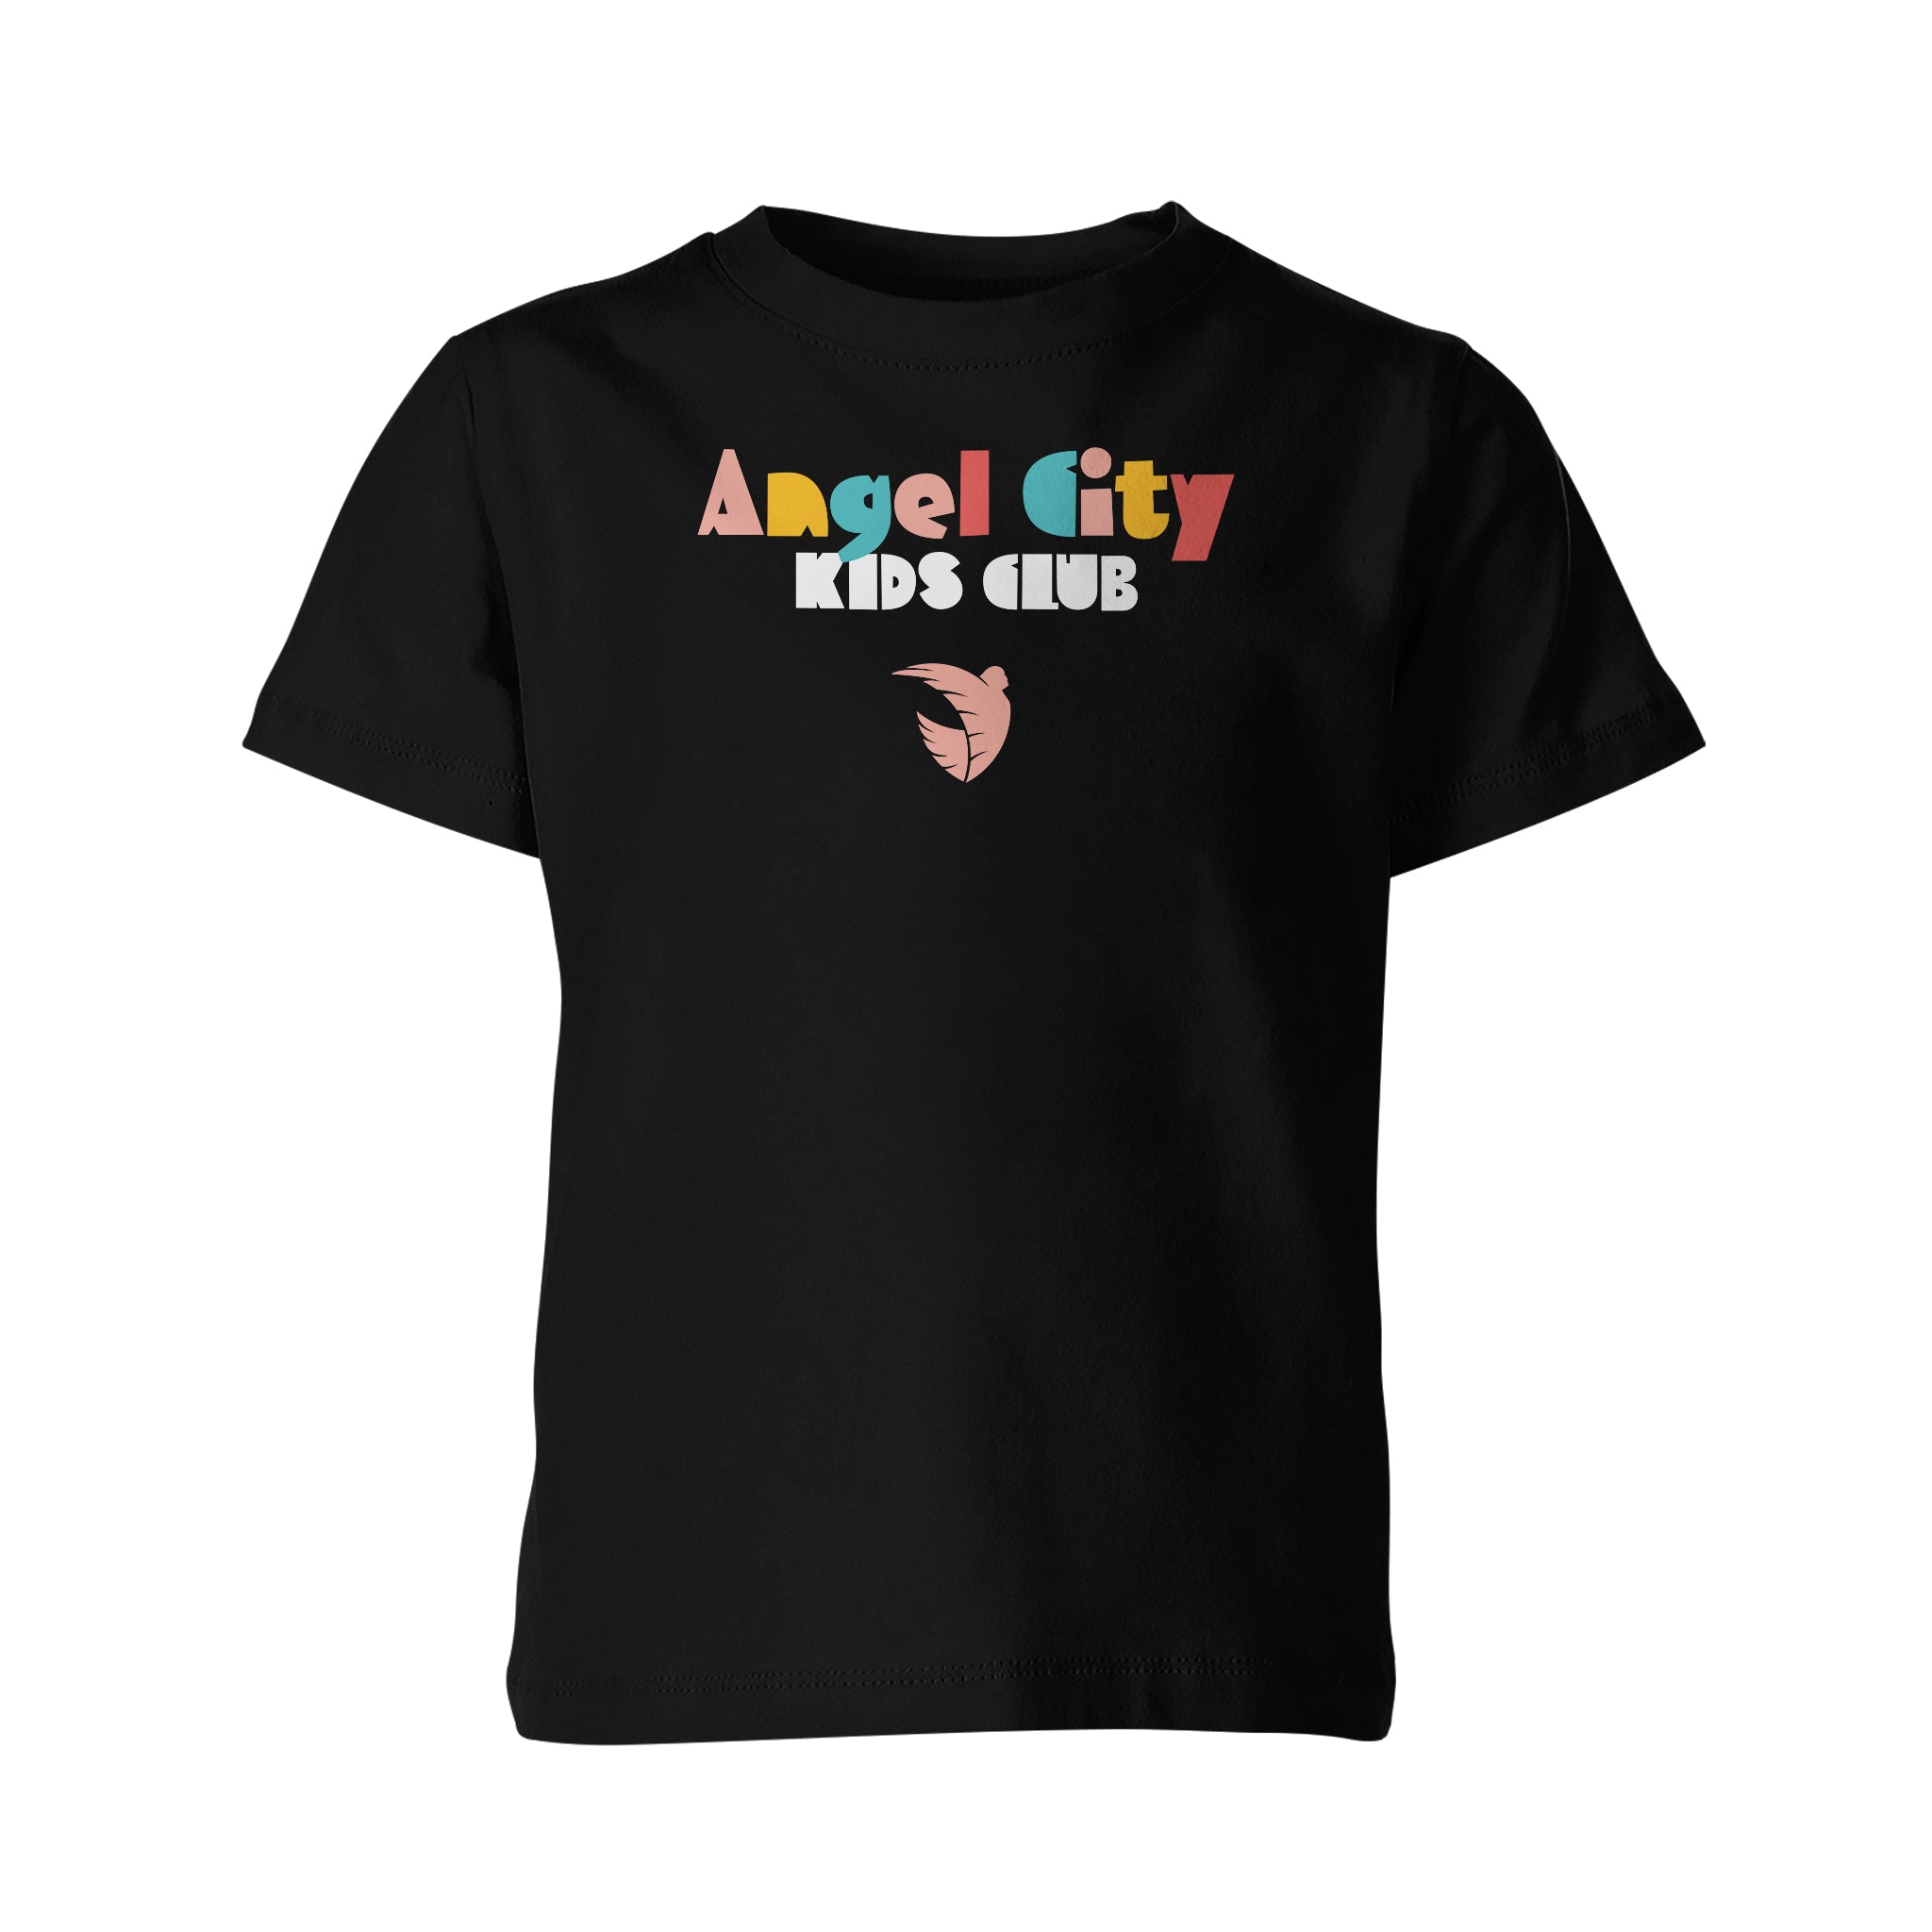 Camiseta Angel City FC Kids Club